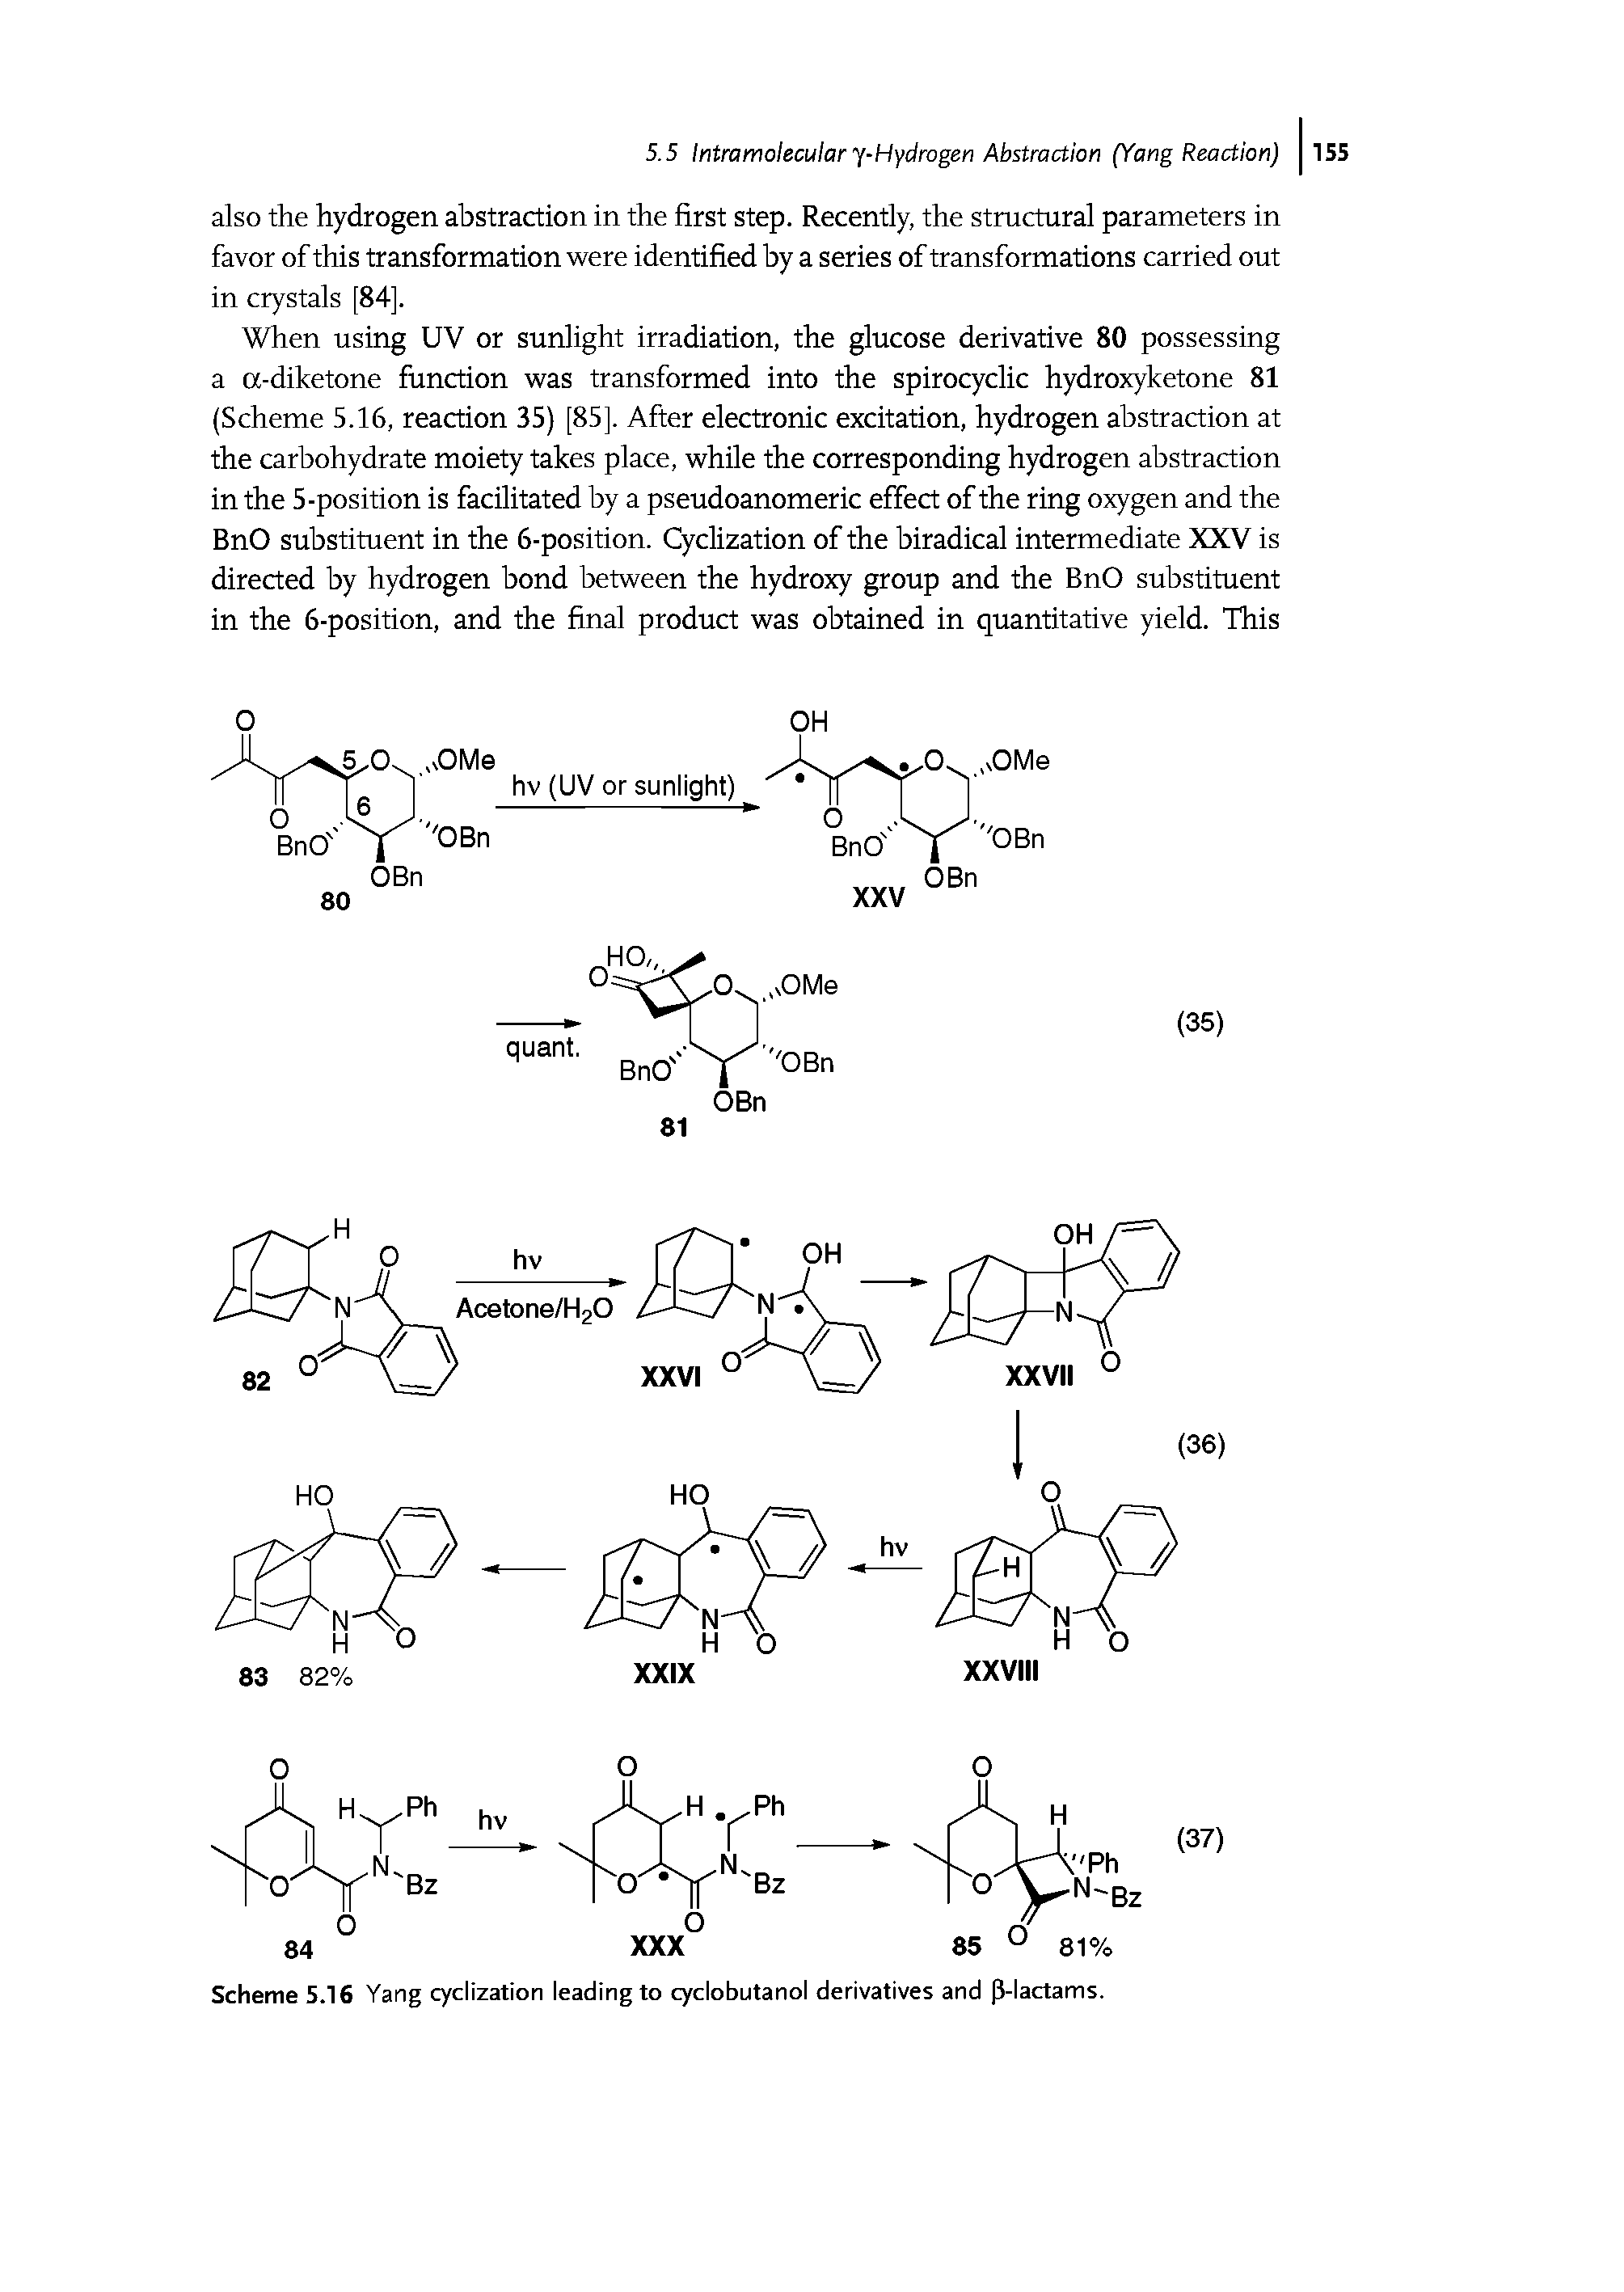 Scheme 5.16 Yang cyclization leading to cyclobutanol derivatives and p-lactams.